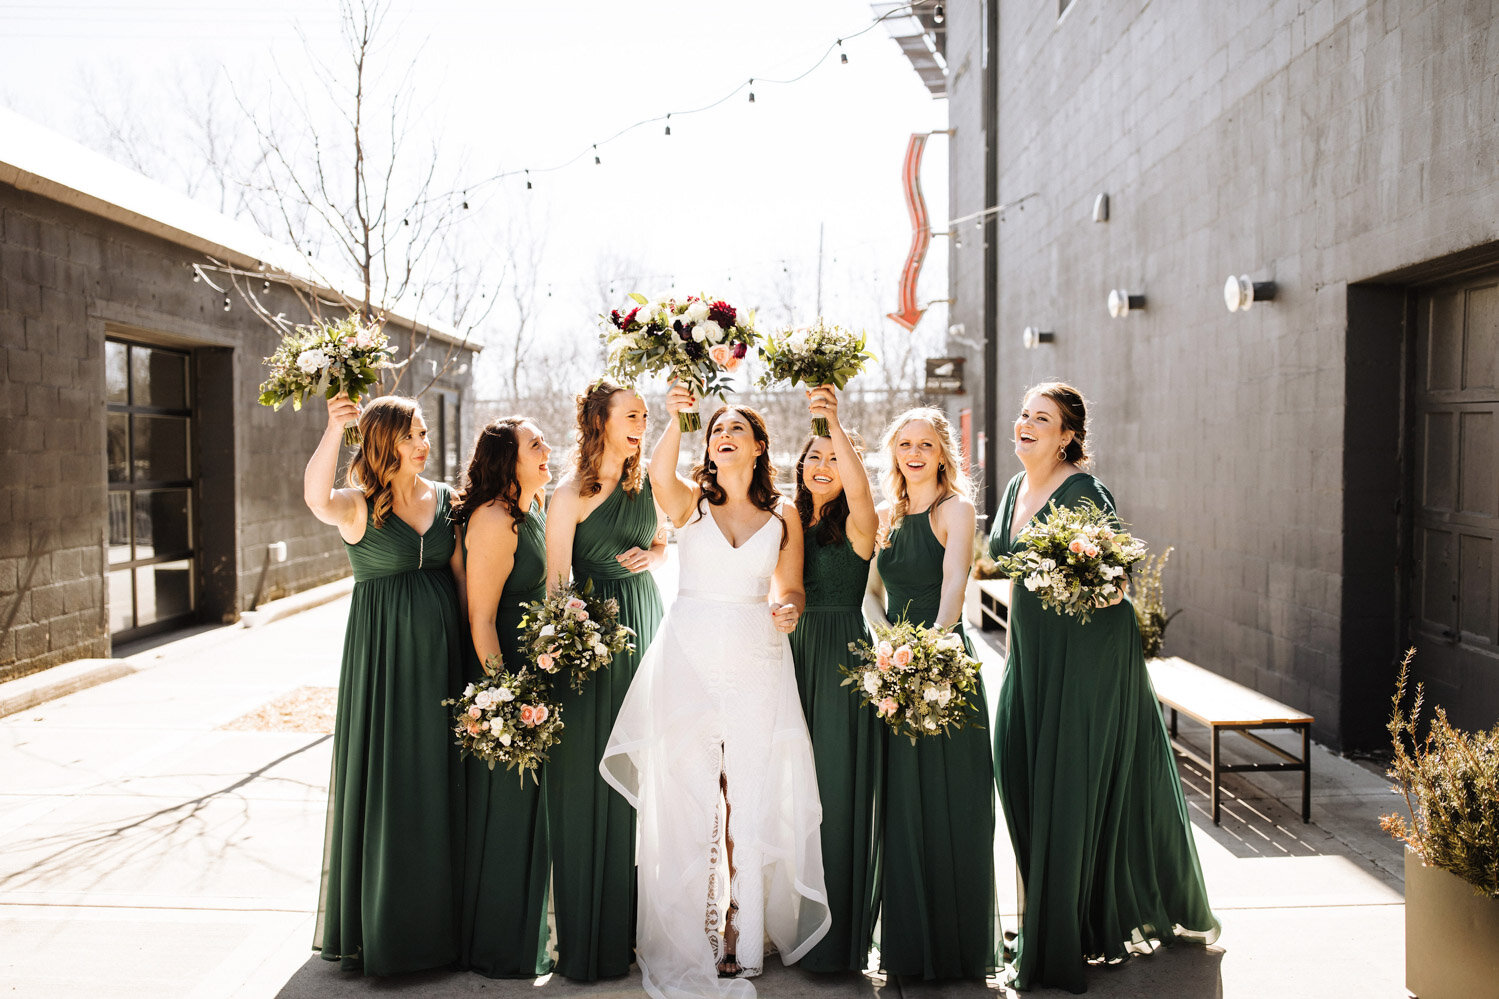 9 Wedding Party Bride Bridesmaids Bouquets Flwers Emerald Dresses.jpg